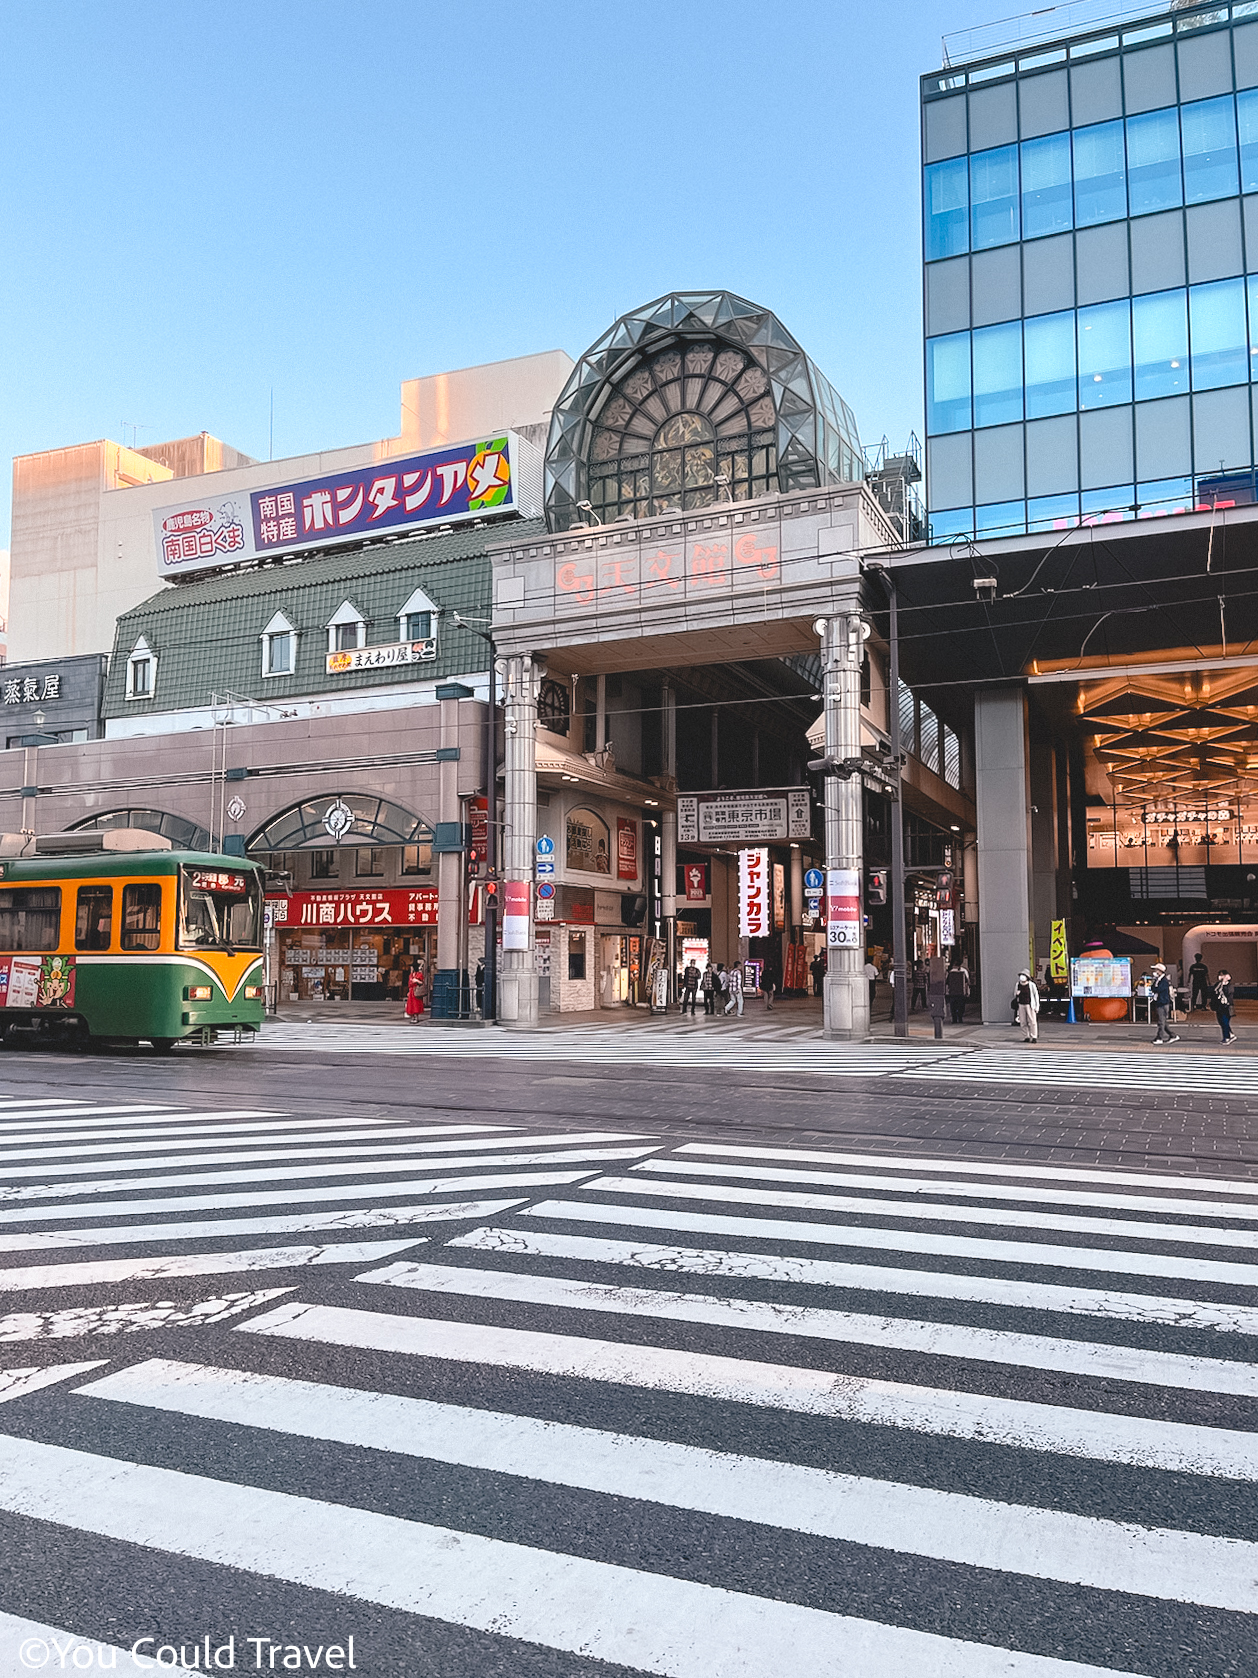 Tenmonkan Shopping district in Kagoshima